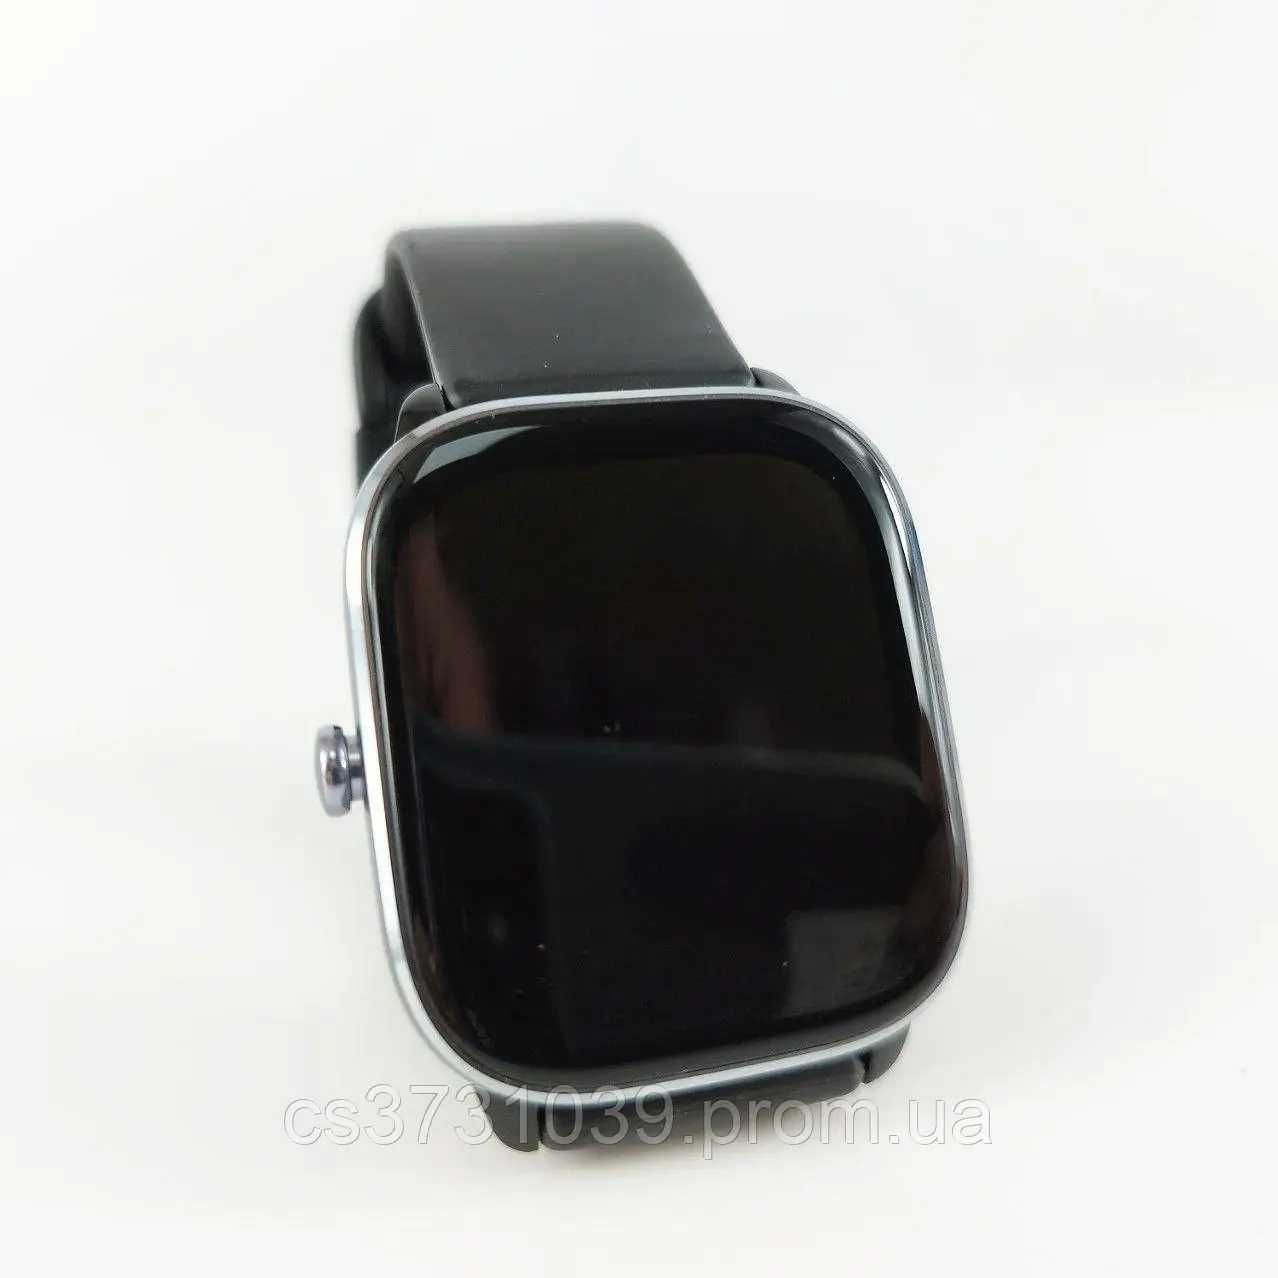 Смарт-часы Amazfit GTS 4 mini midnight black